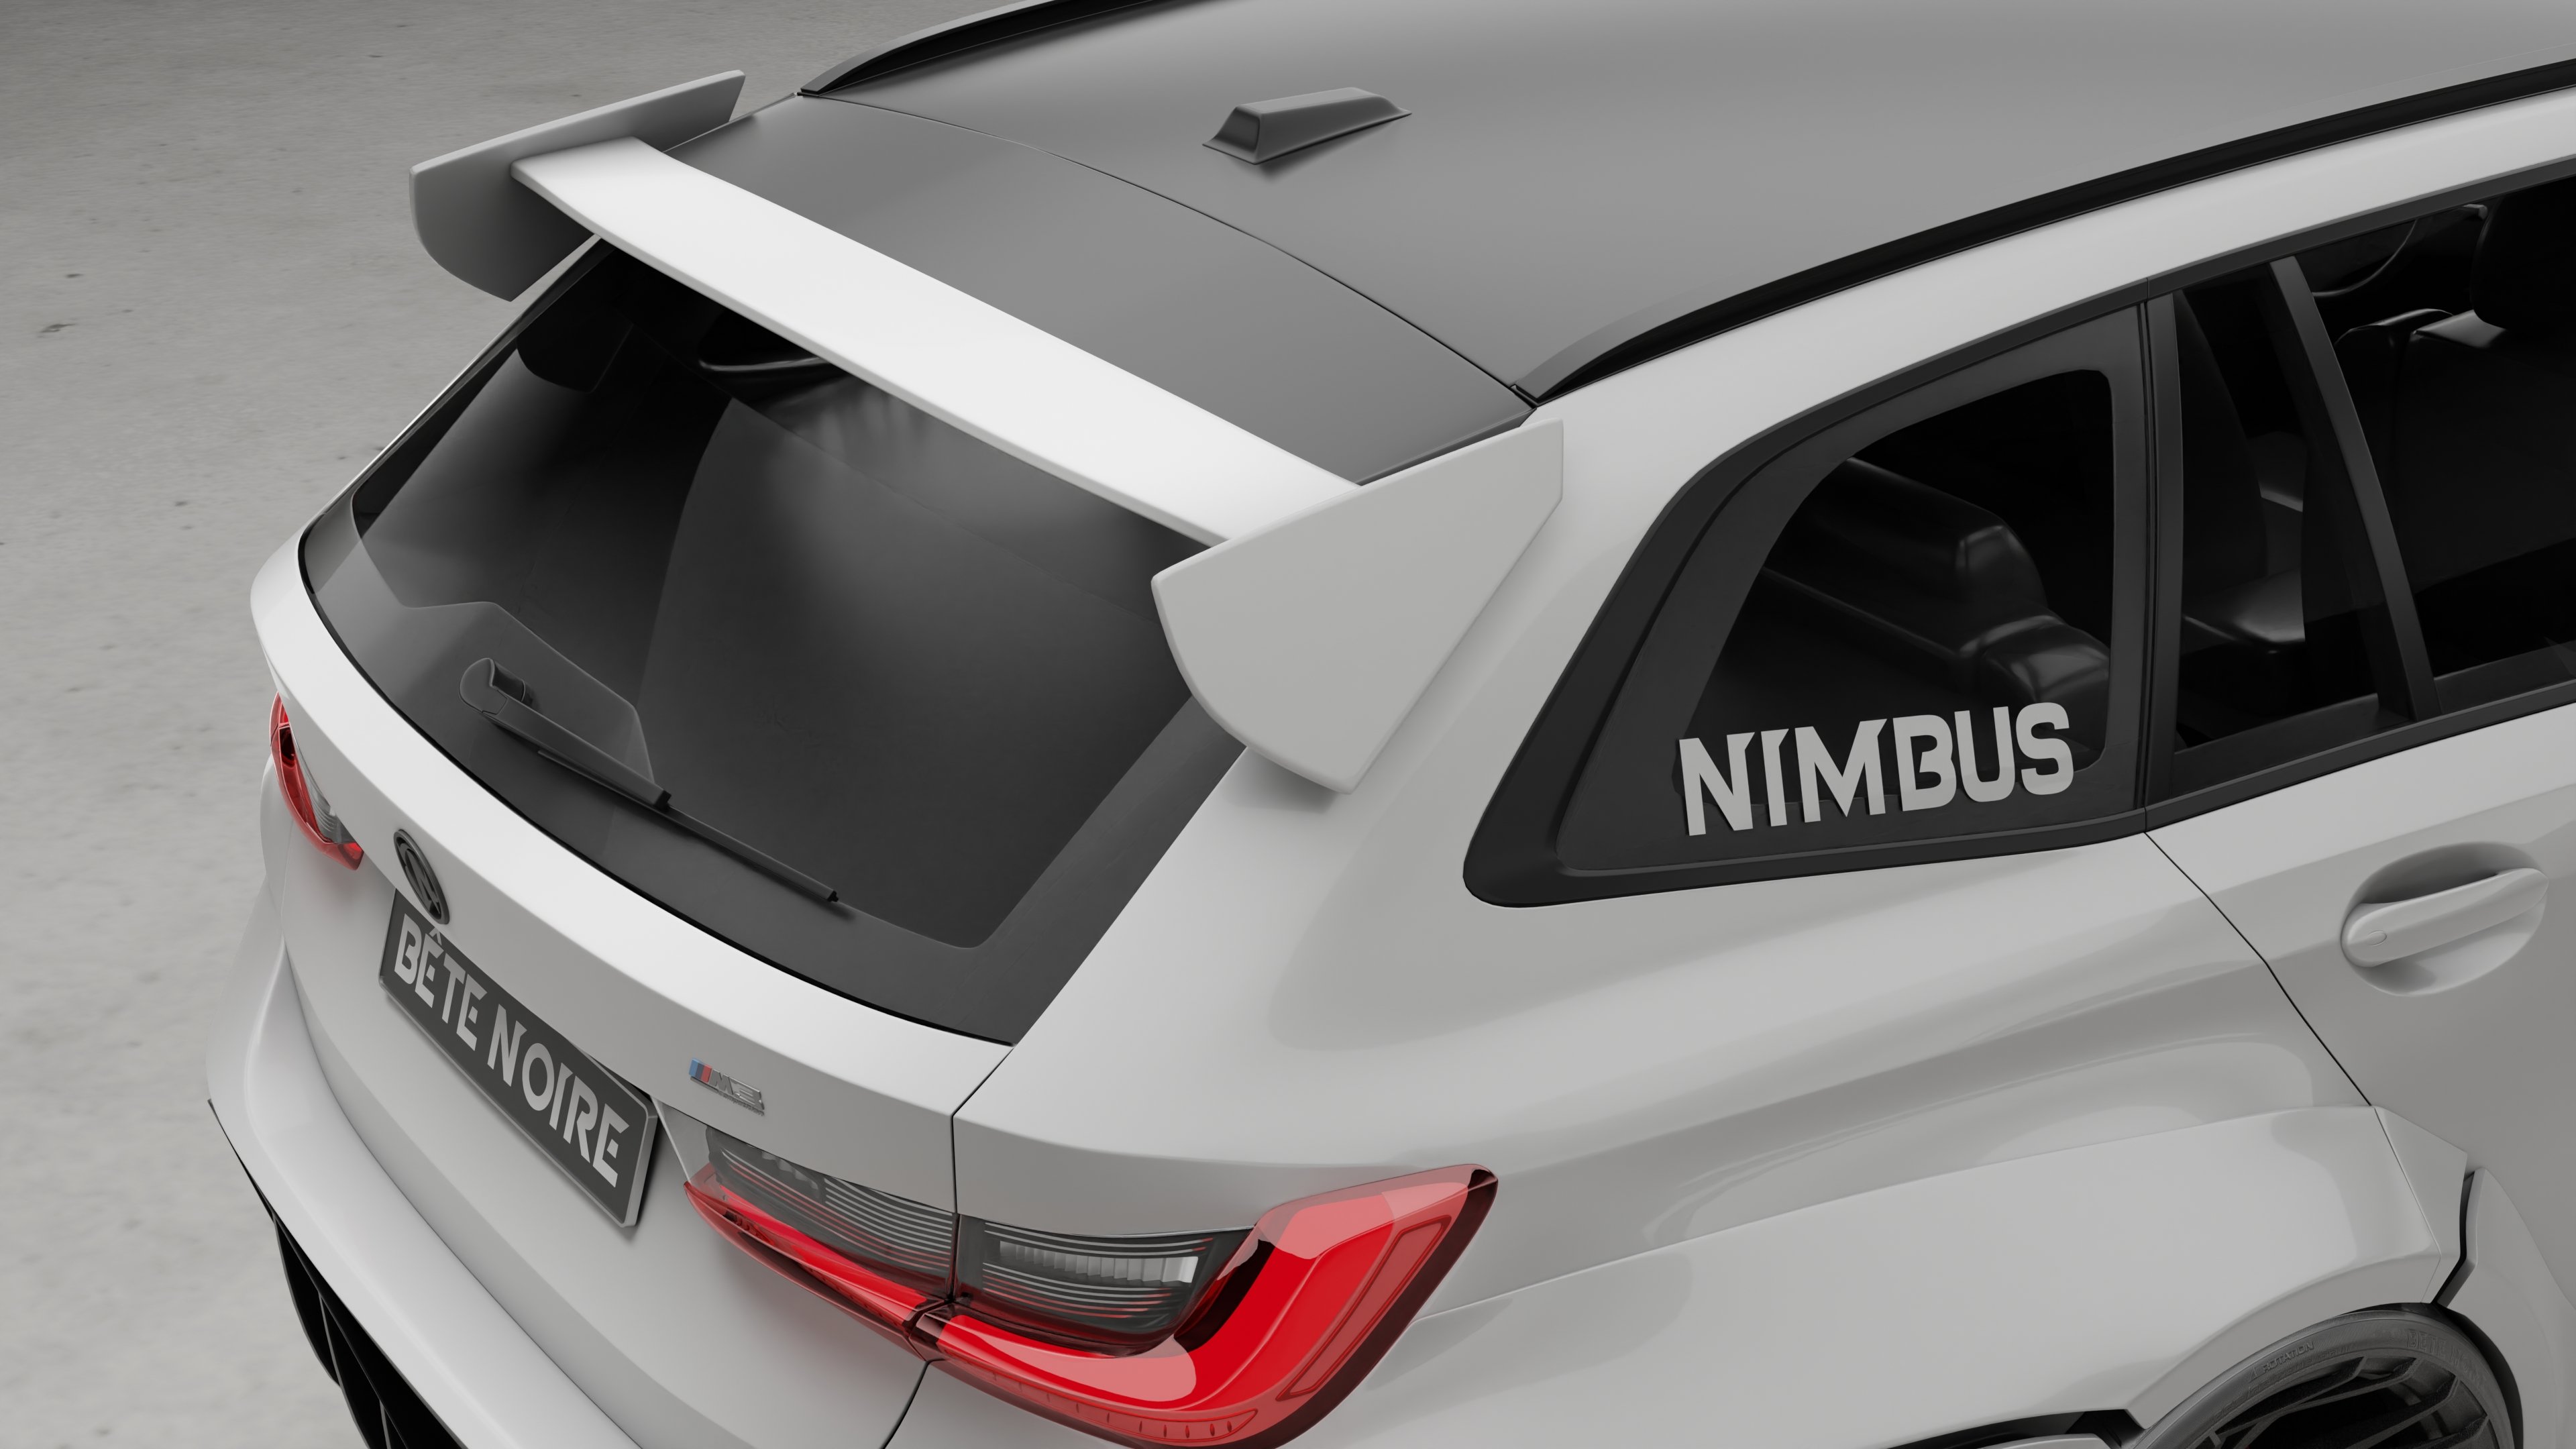 BMW М3 G81 Touring "Nimbus" Custom Design Wide Body Kit by Bête Noire